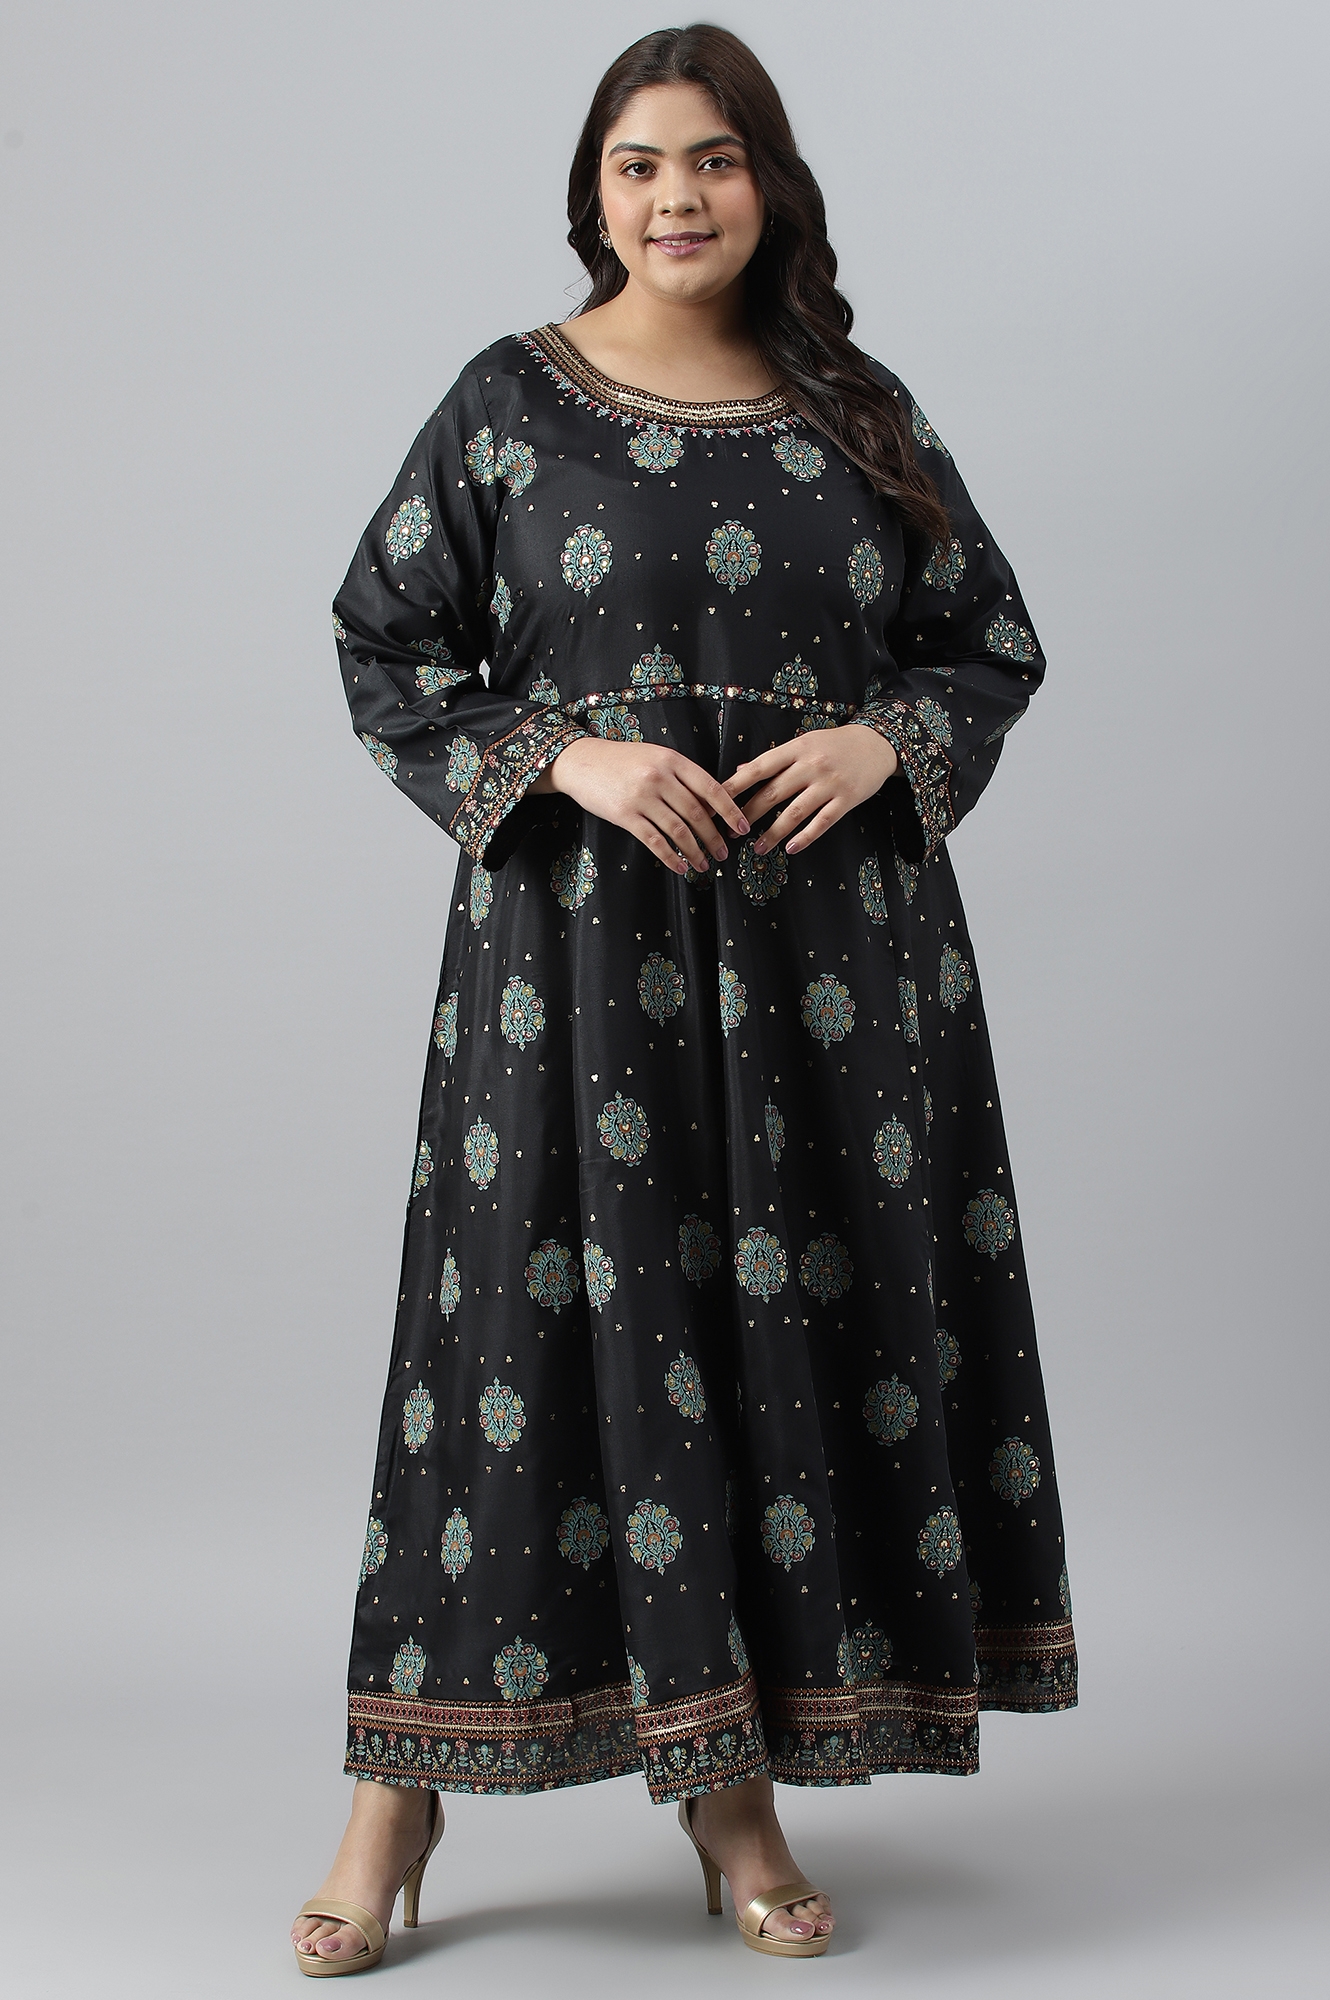 W Jet Black Printed Kalidar Embroidered Plus Size Dress